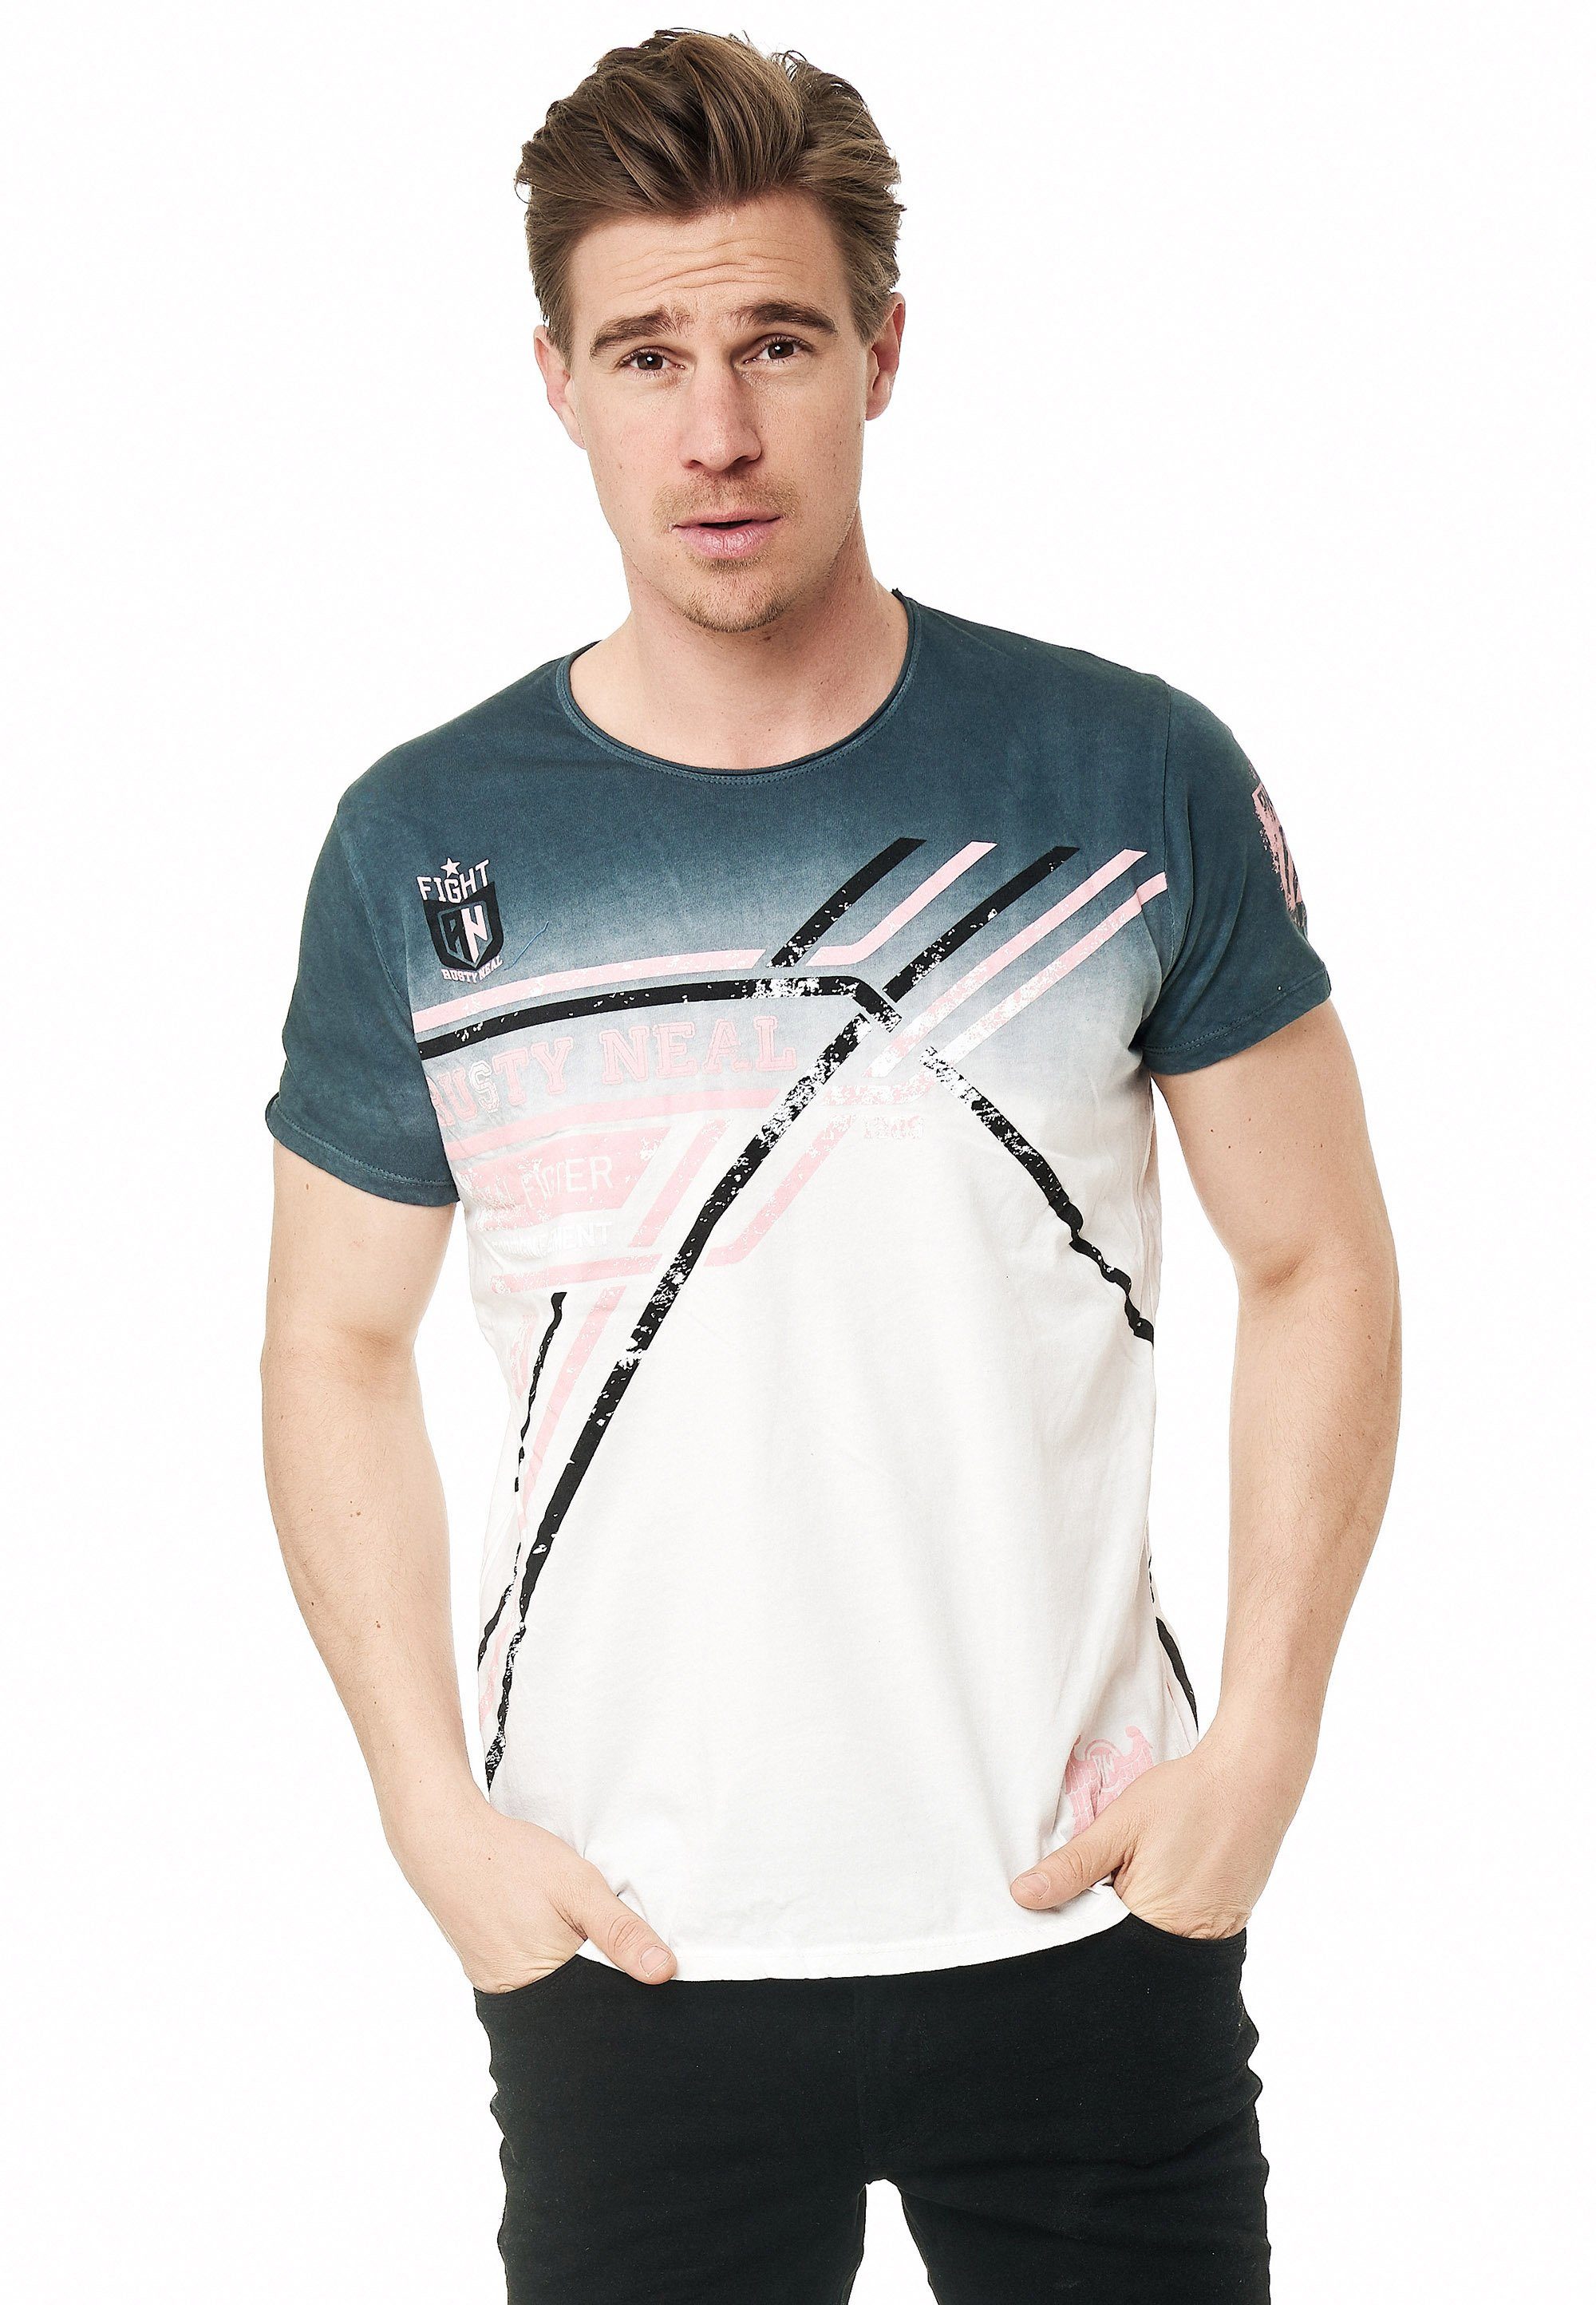 modernem anthrazit T-Shirt Rusty Neal mit Print